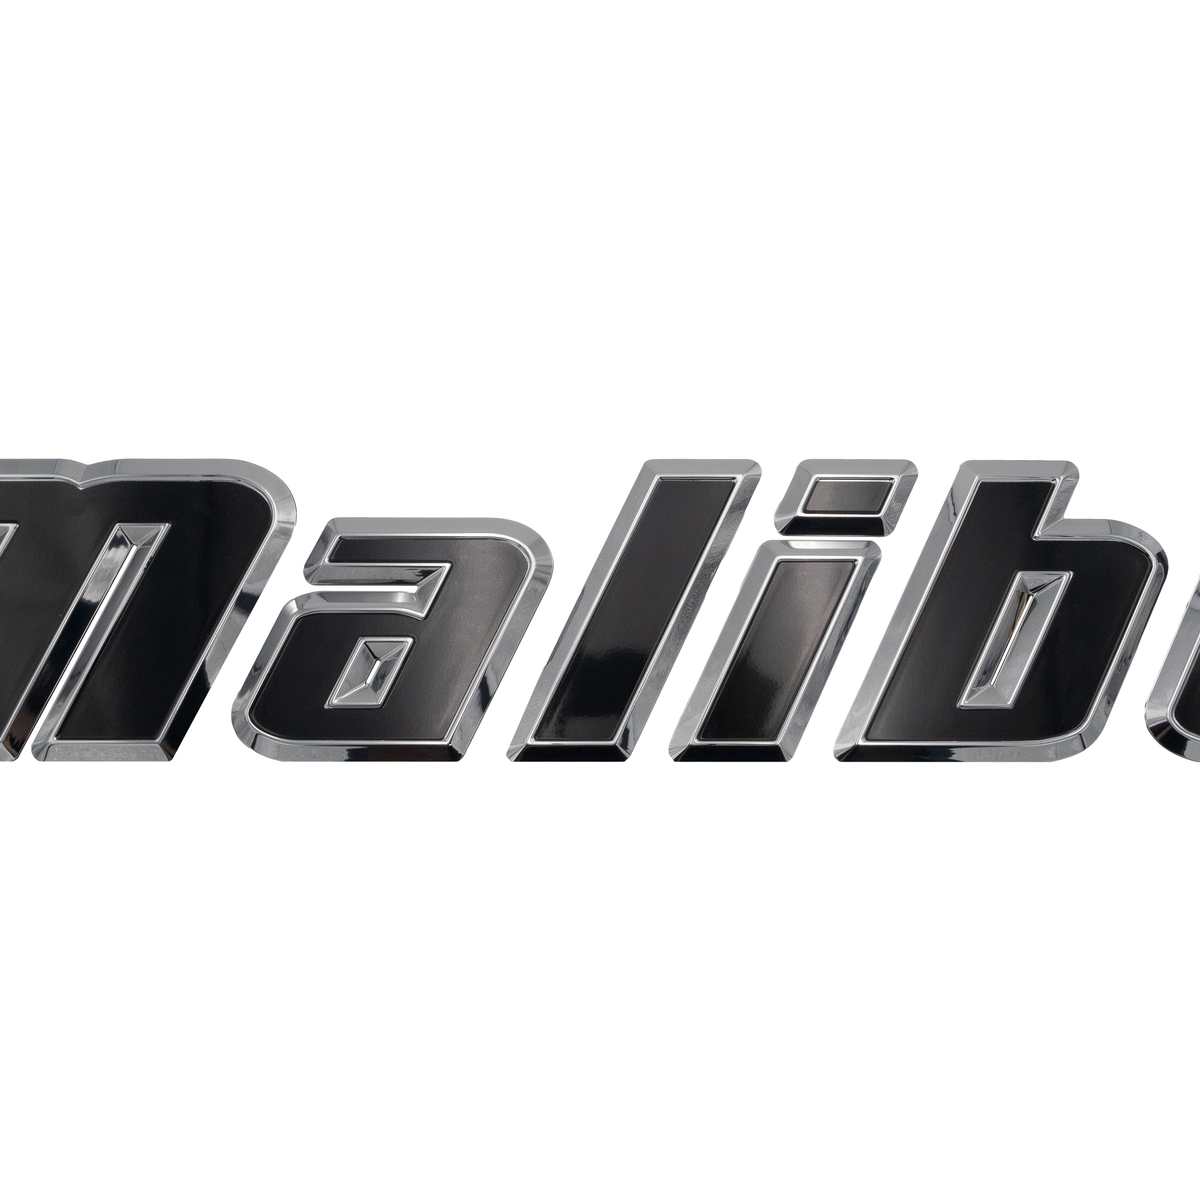 MALIBU GELCOAT BLACK 07-08 (CL)